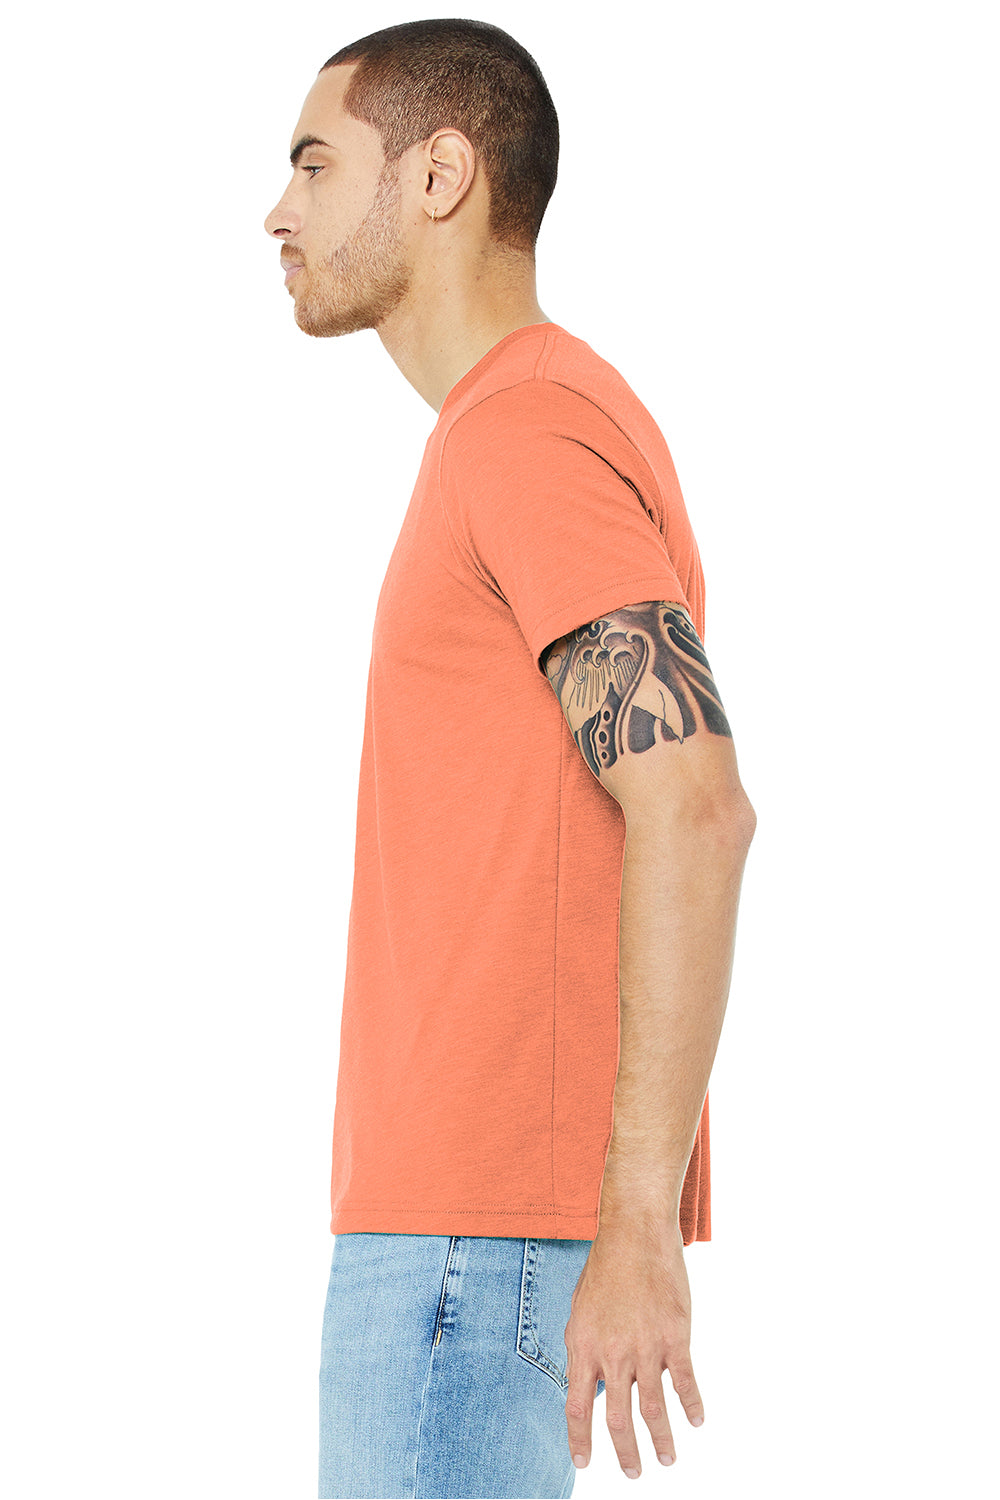 Bella + Canvas BC3413/3413C/3413 Mens Short Sleeve Crewneck T-Shirt Orange Model Side